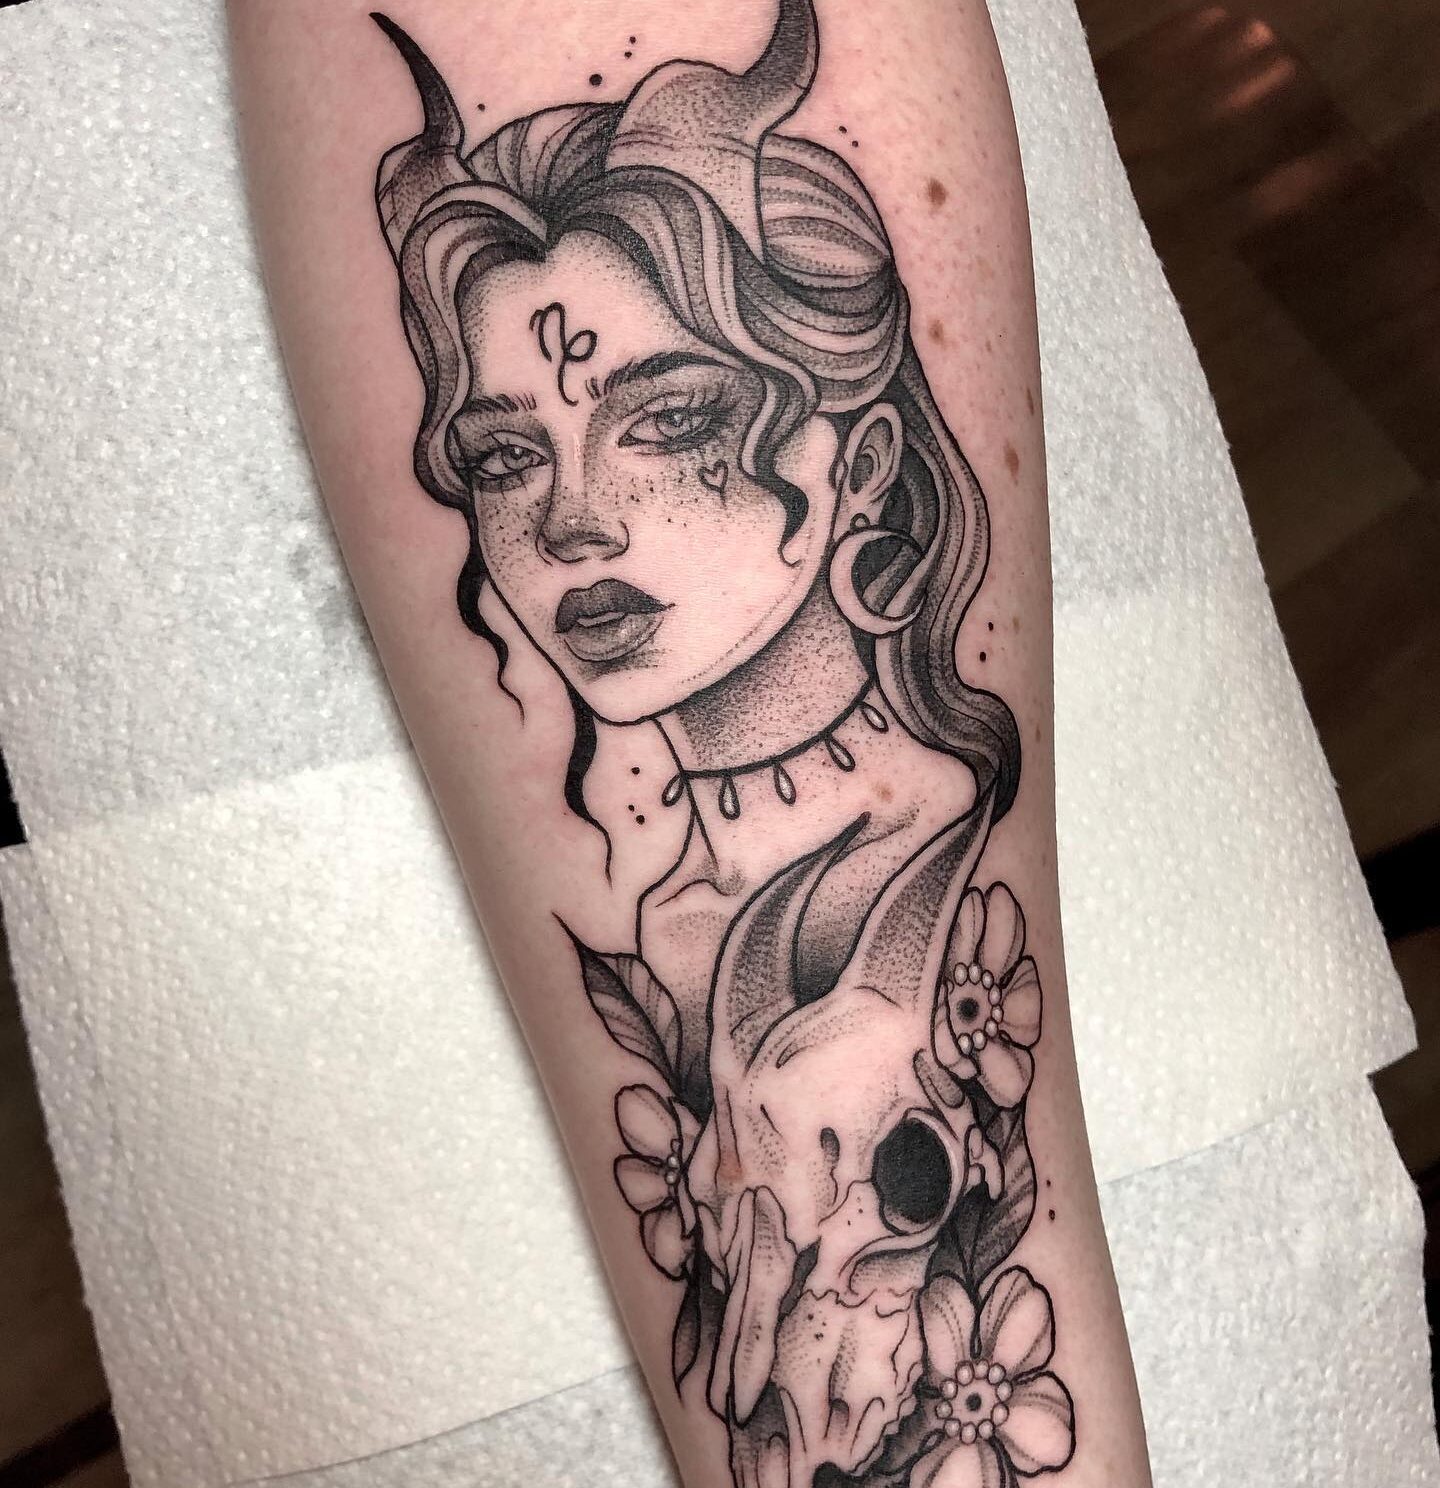 Capricorn Goddess tattoo located on the inner forearm